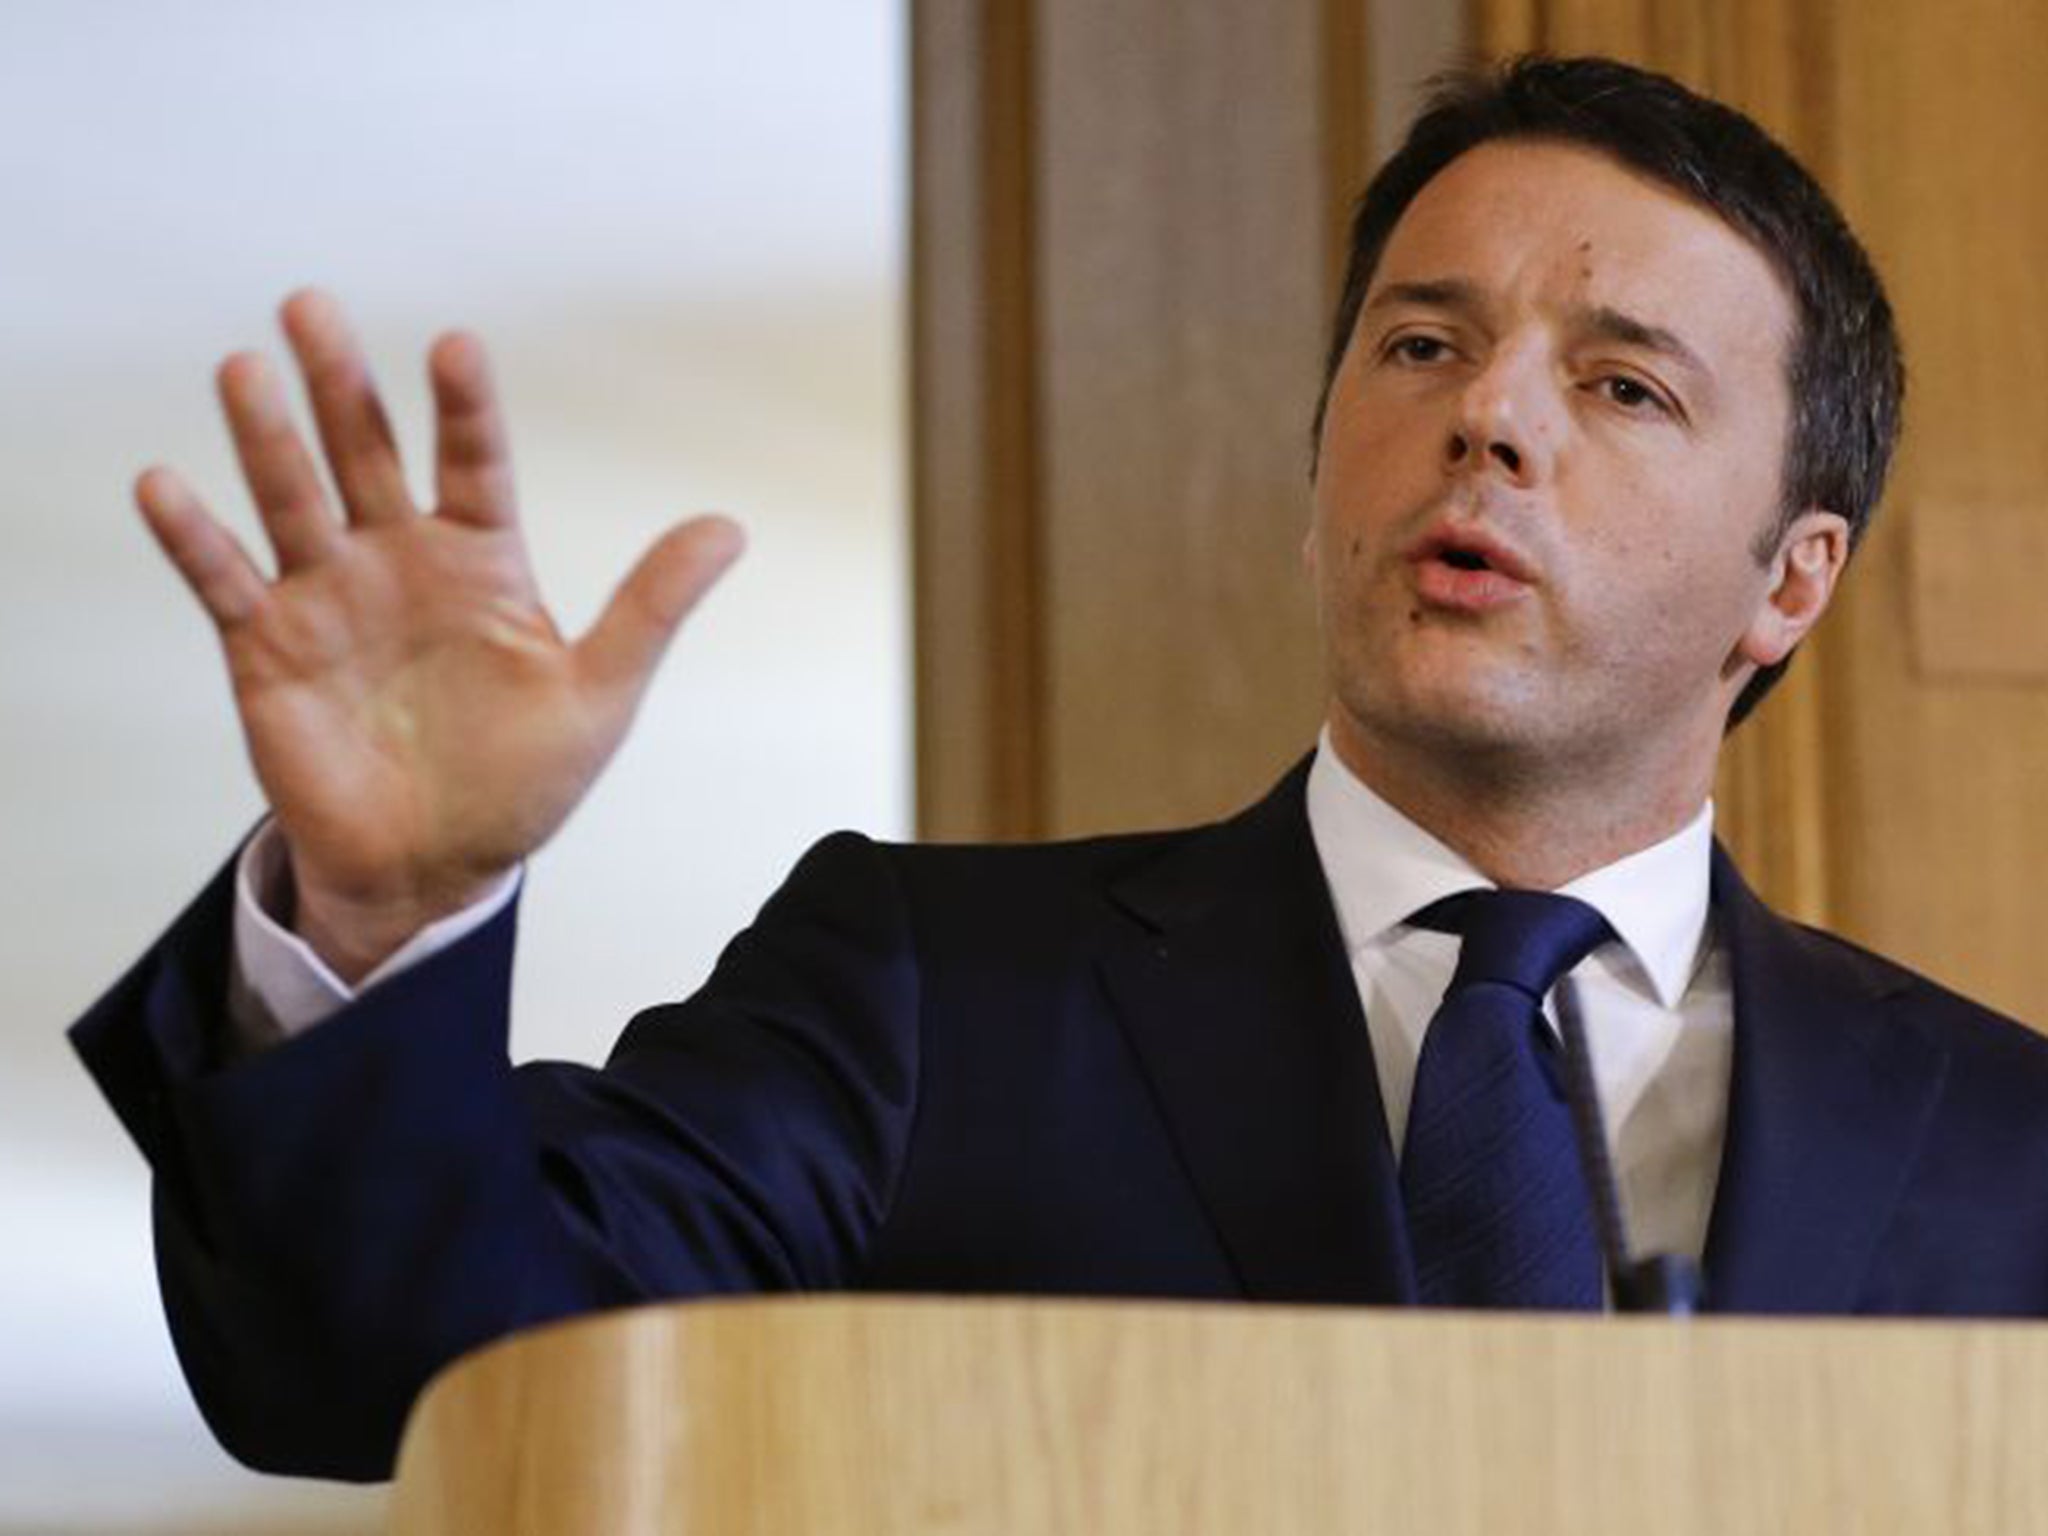 Italian Prime Minister Matteo Renzi has been compared to Tony Blair